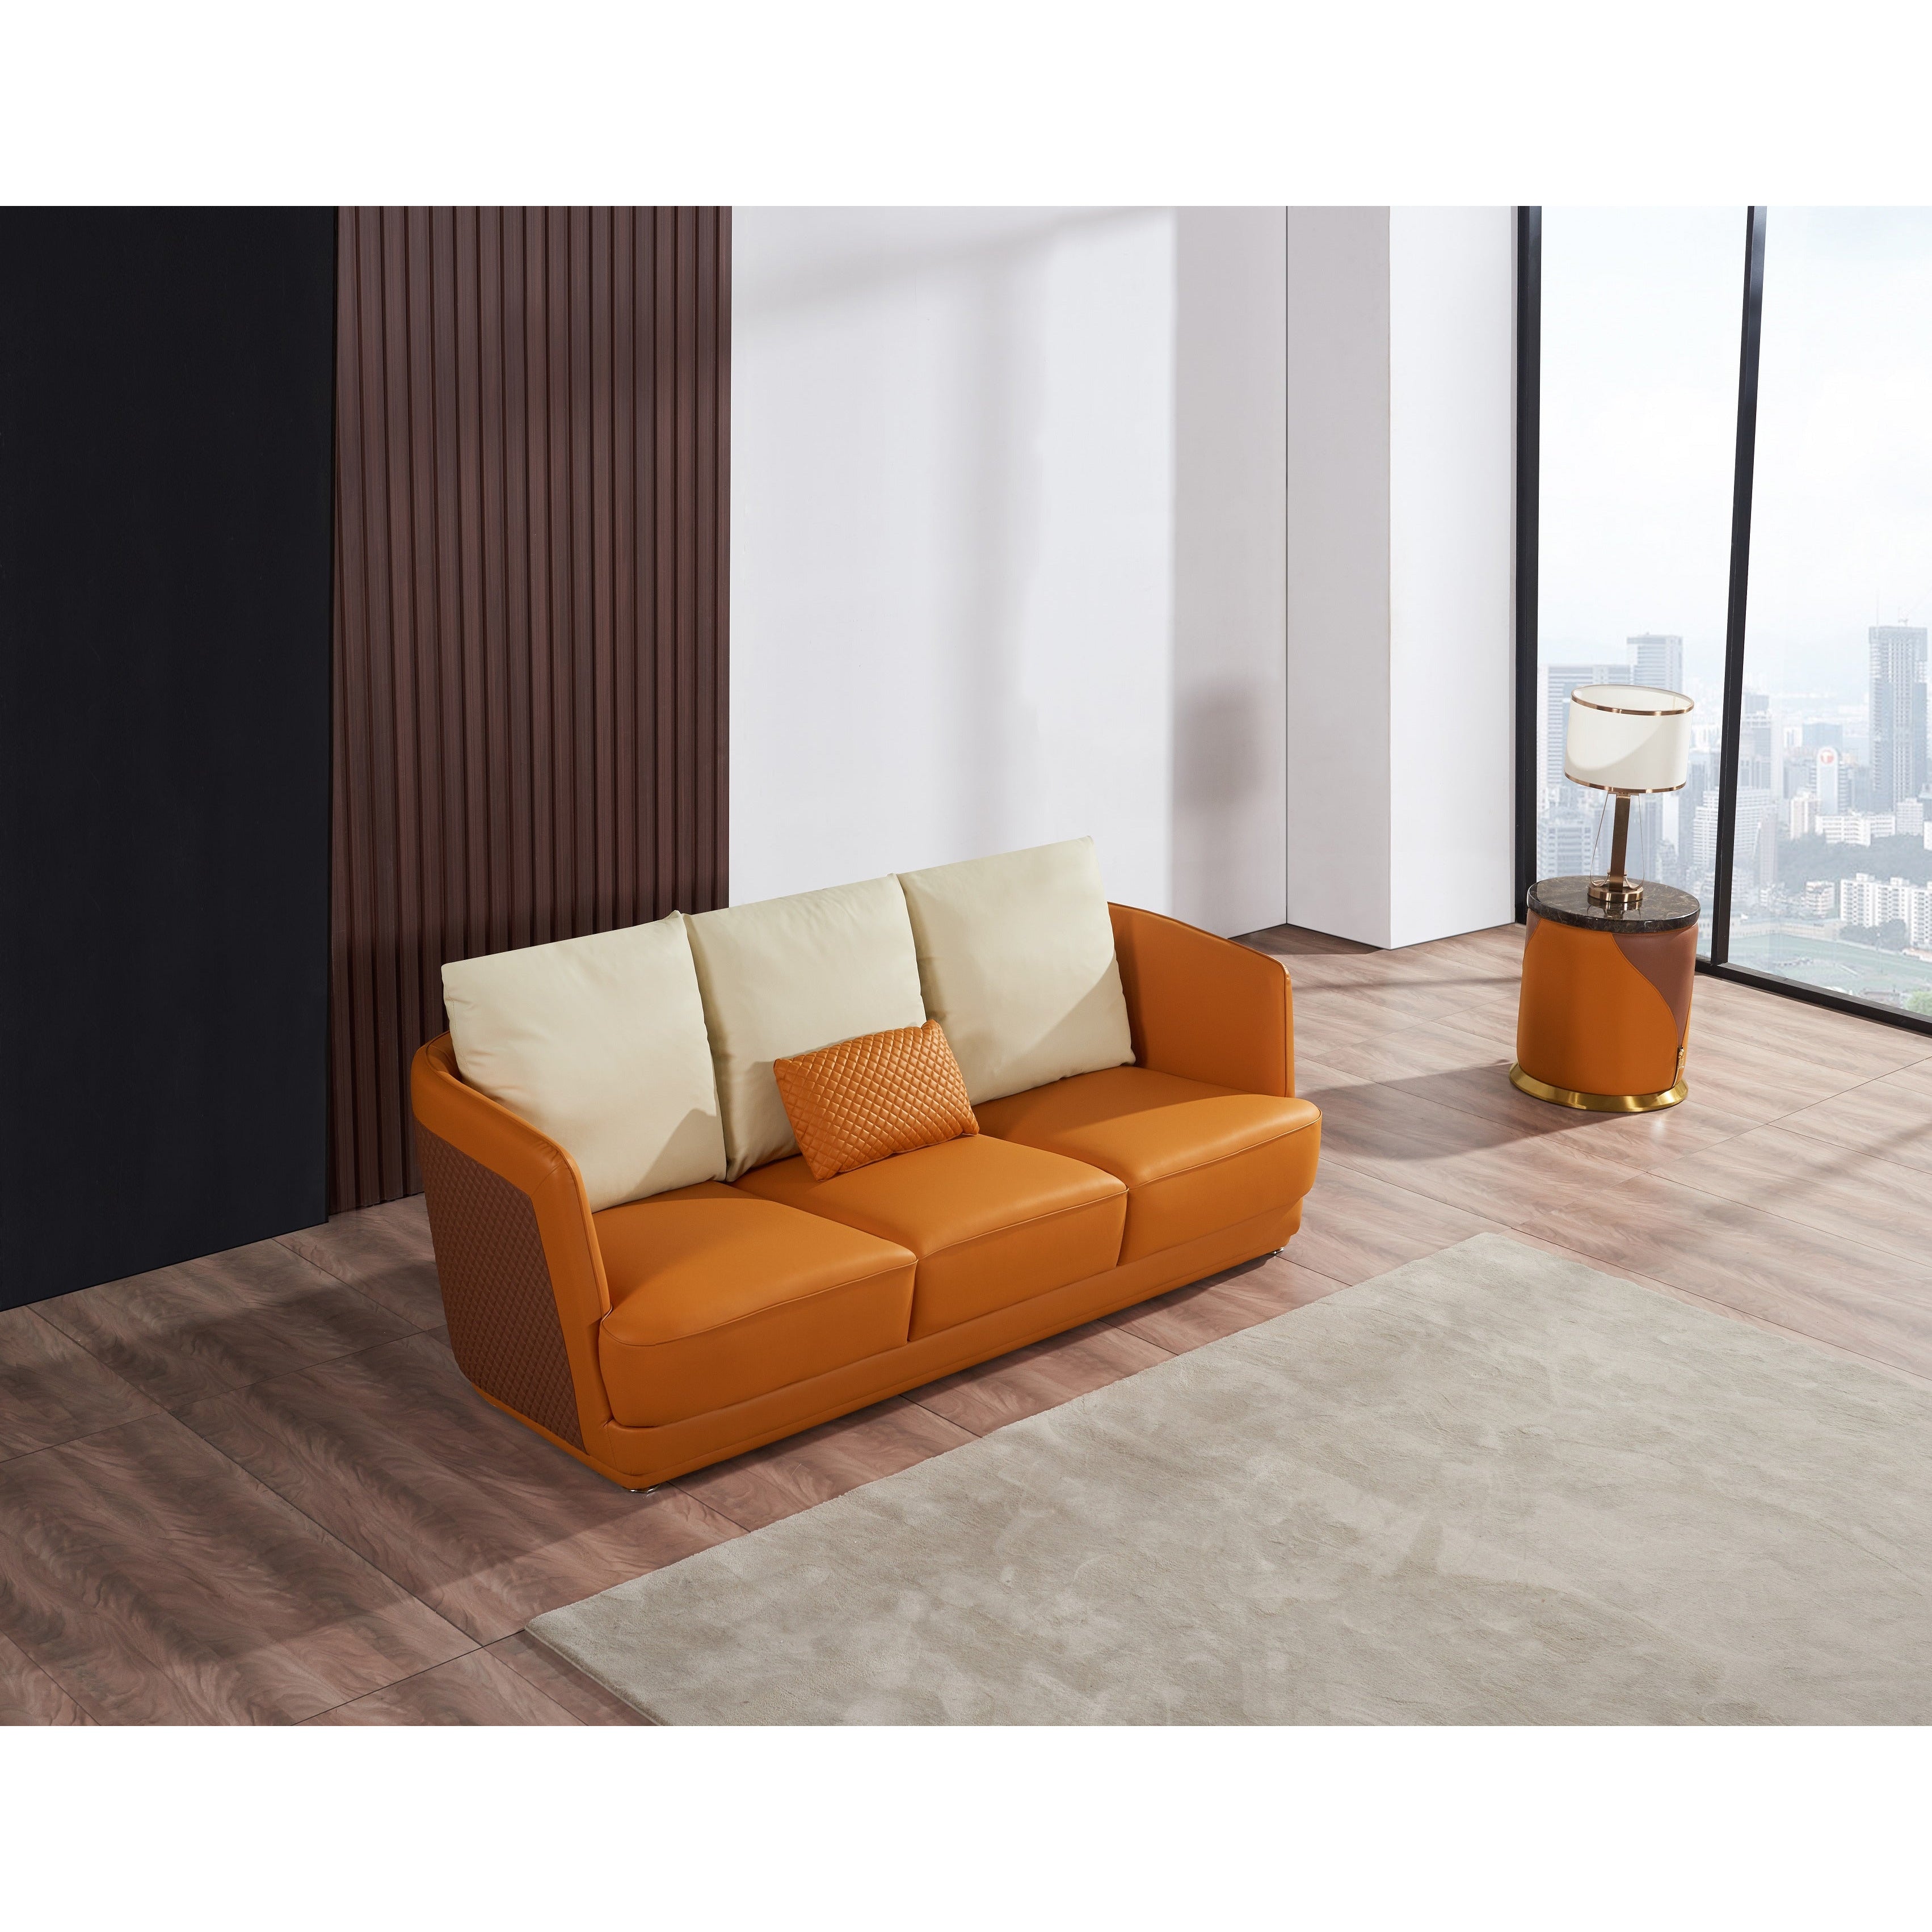 European Furniture - Glamour Sofa Orange & Brown Italian Leather - EF-51619-S - New Star Living